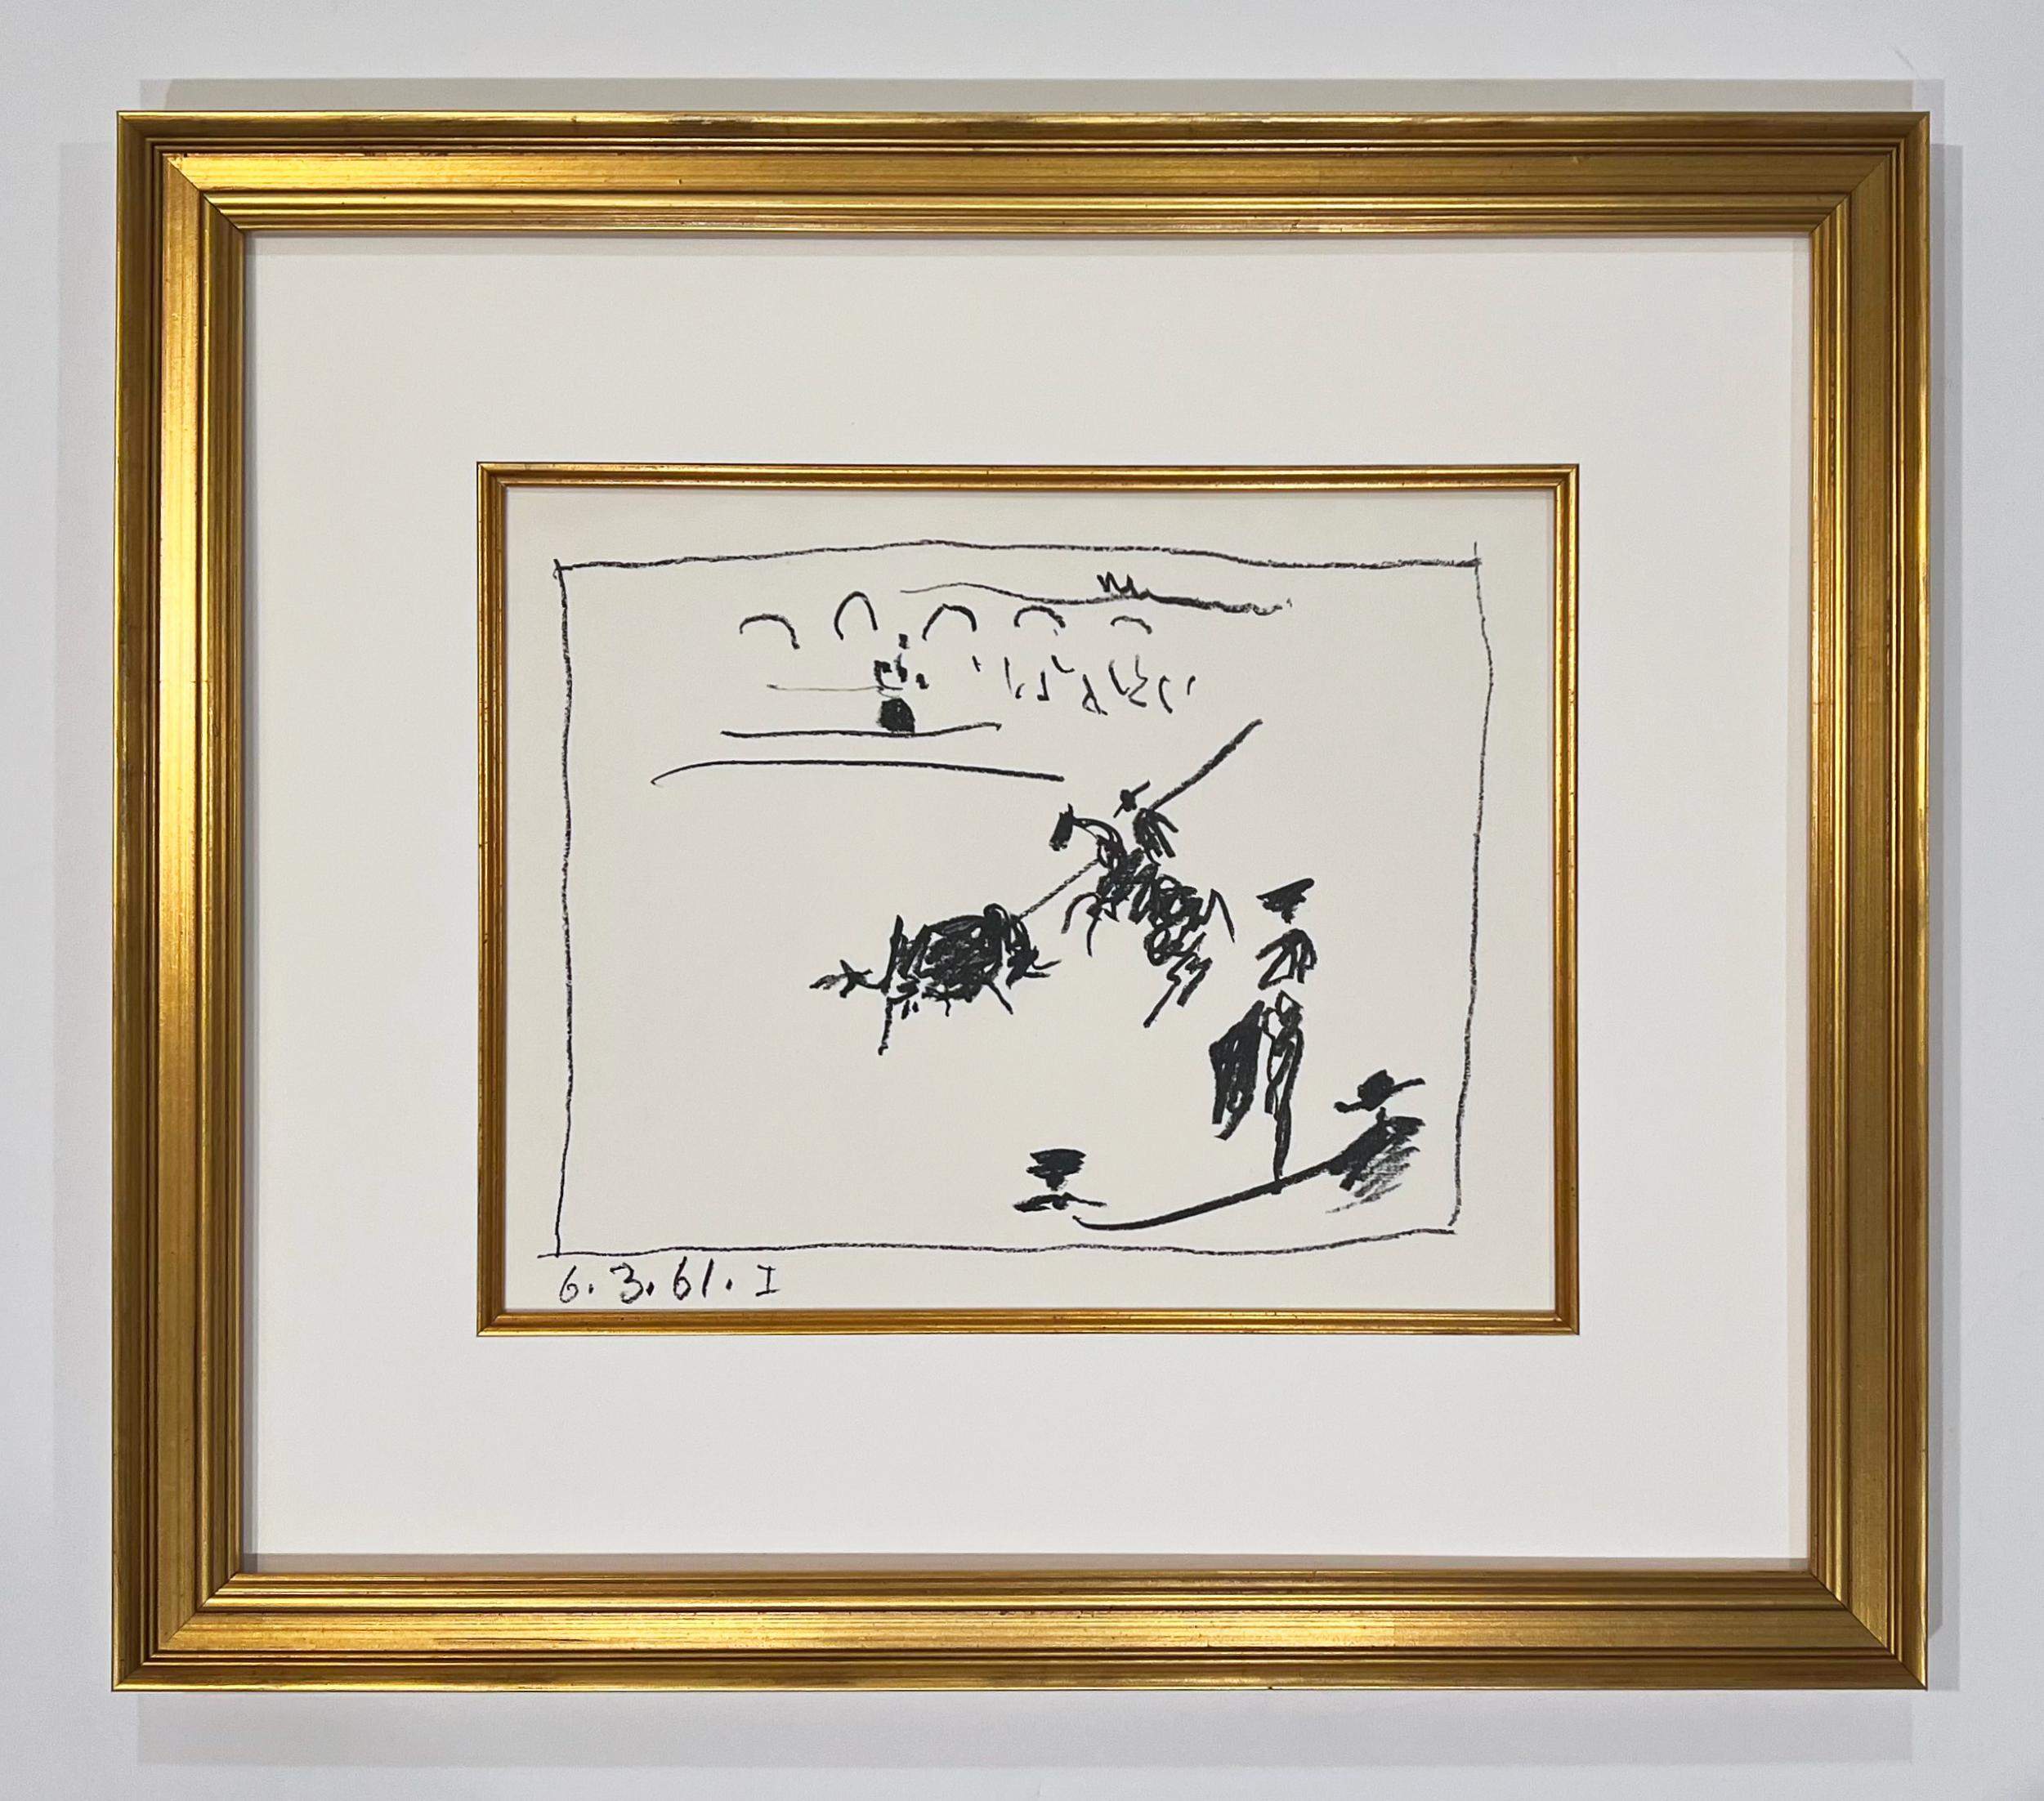 Artist: Pablo Picasso
Title: La Pique (I), Le Picador (II), Jeu de la Cape (III), Les Banderilles (IV)
Portfolio: A Los Toros Avec Picasso
Medium: Set of four original transfer lithographs
Year: 1961
Edition: Unnumbered
Framed Size: 16 3/4